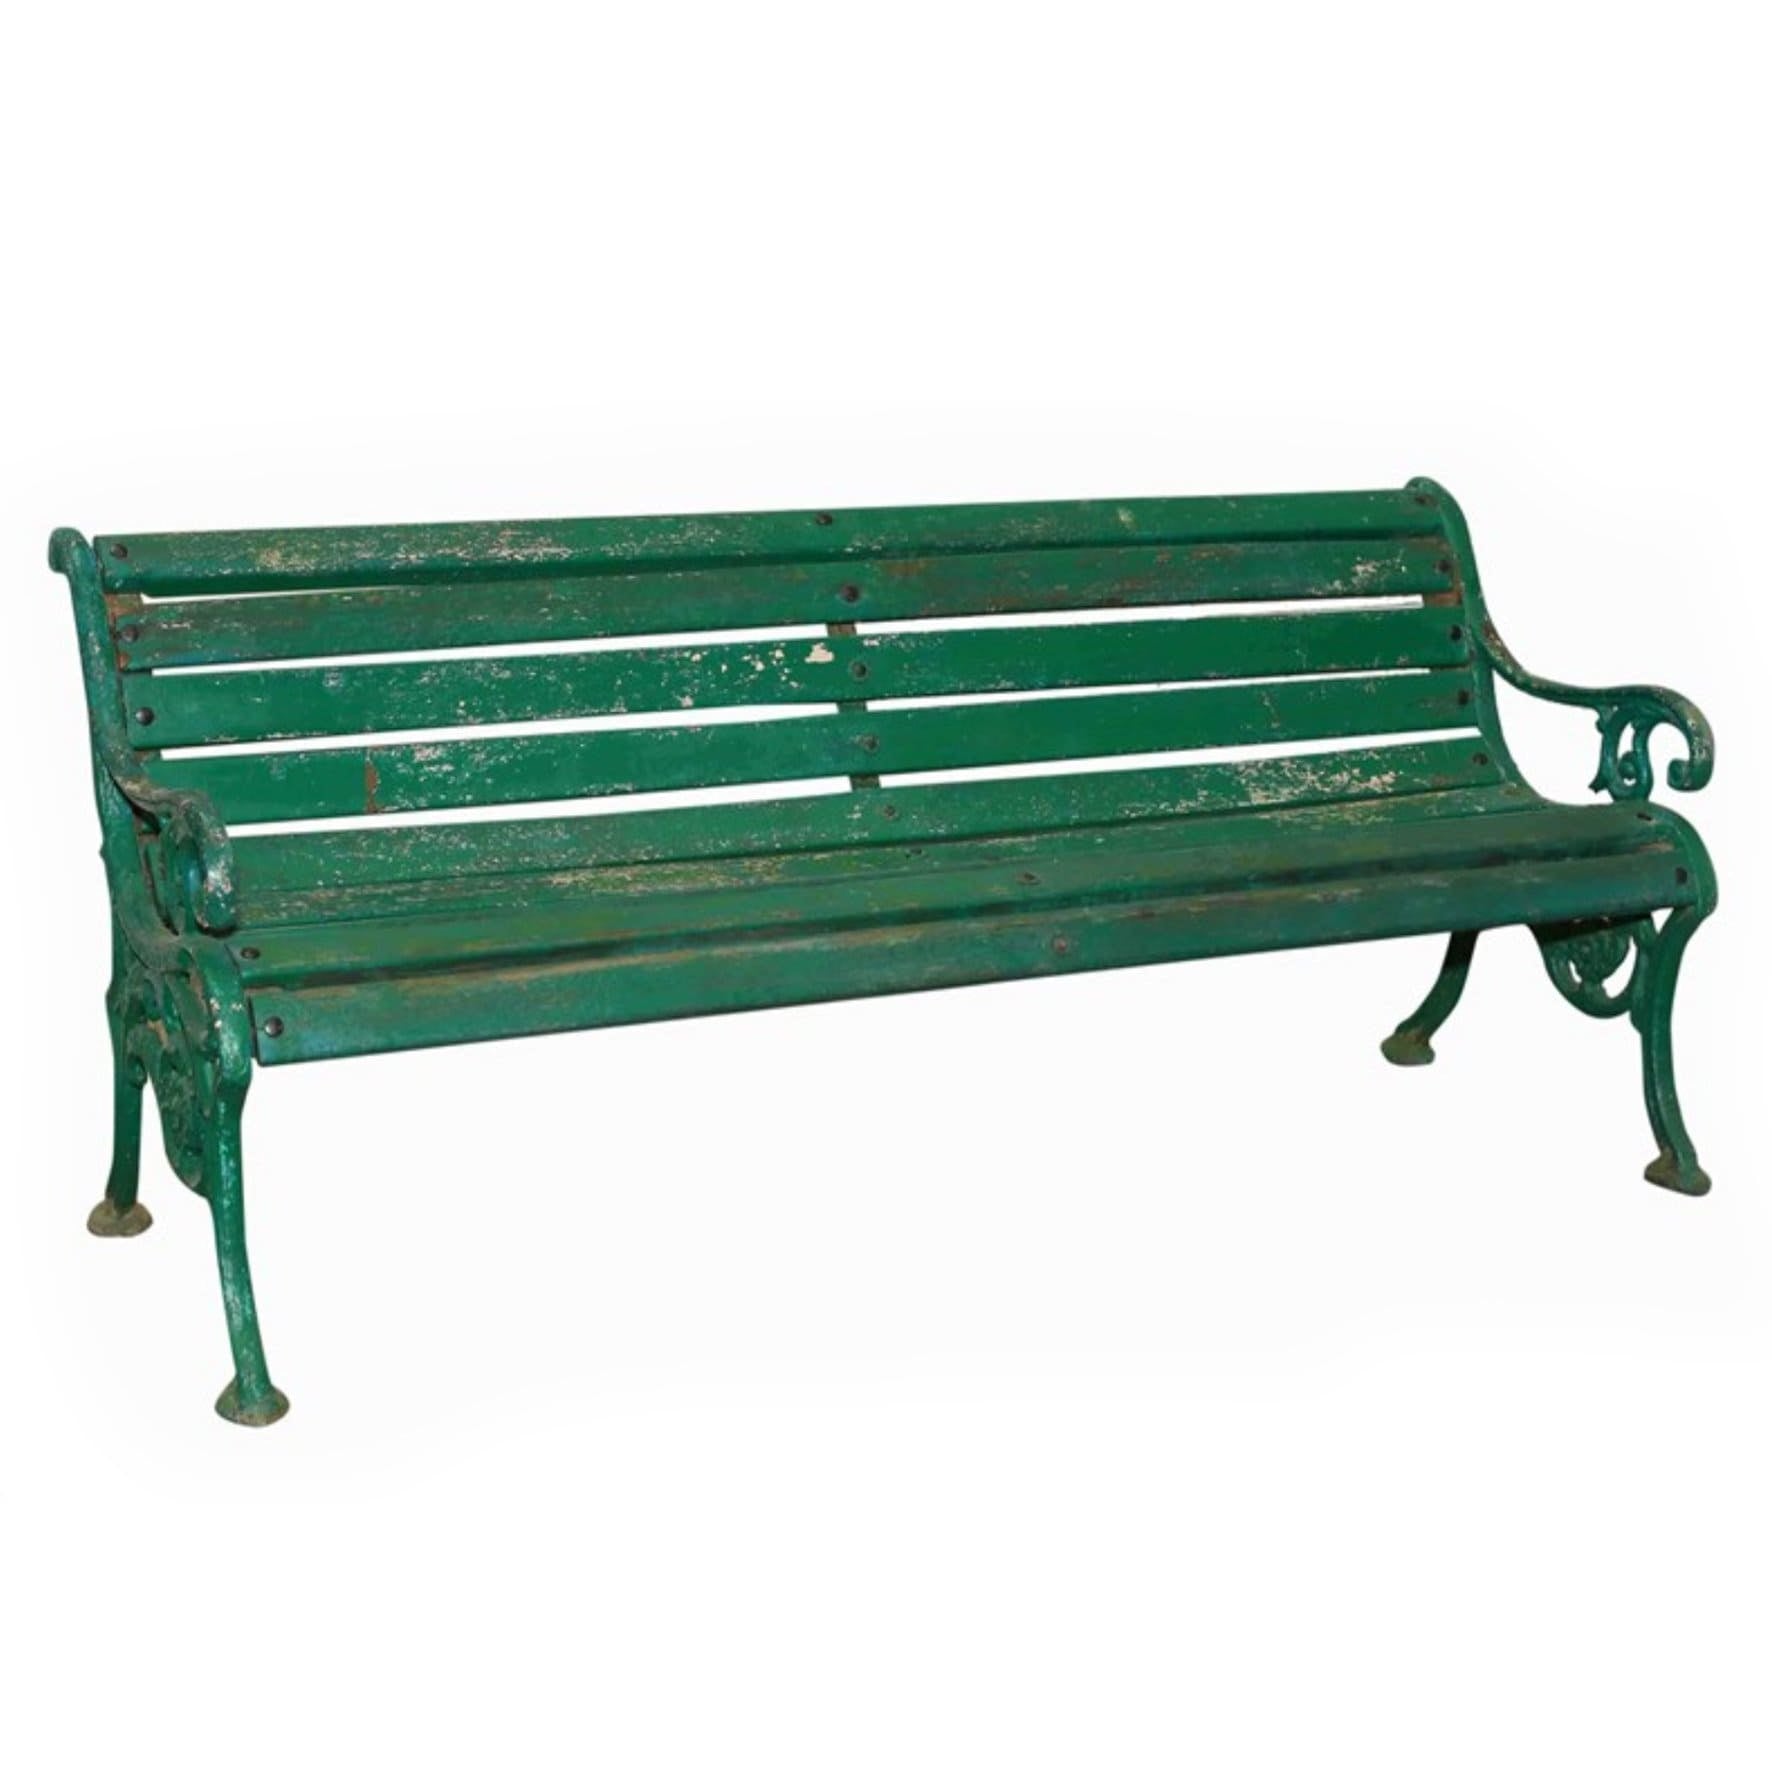 Original Green Park Bench Seat